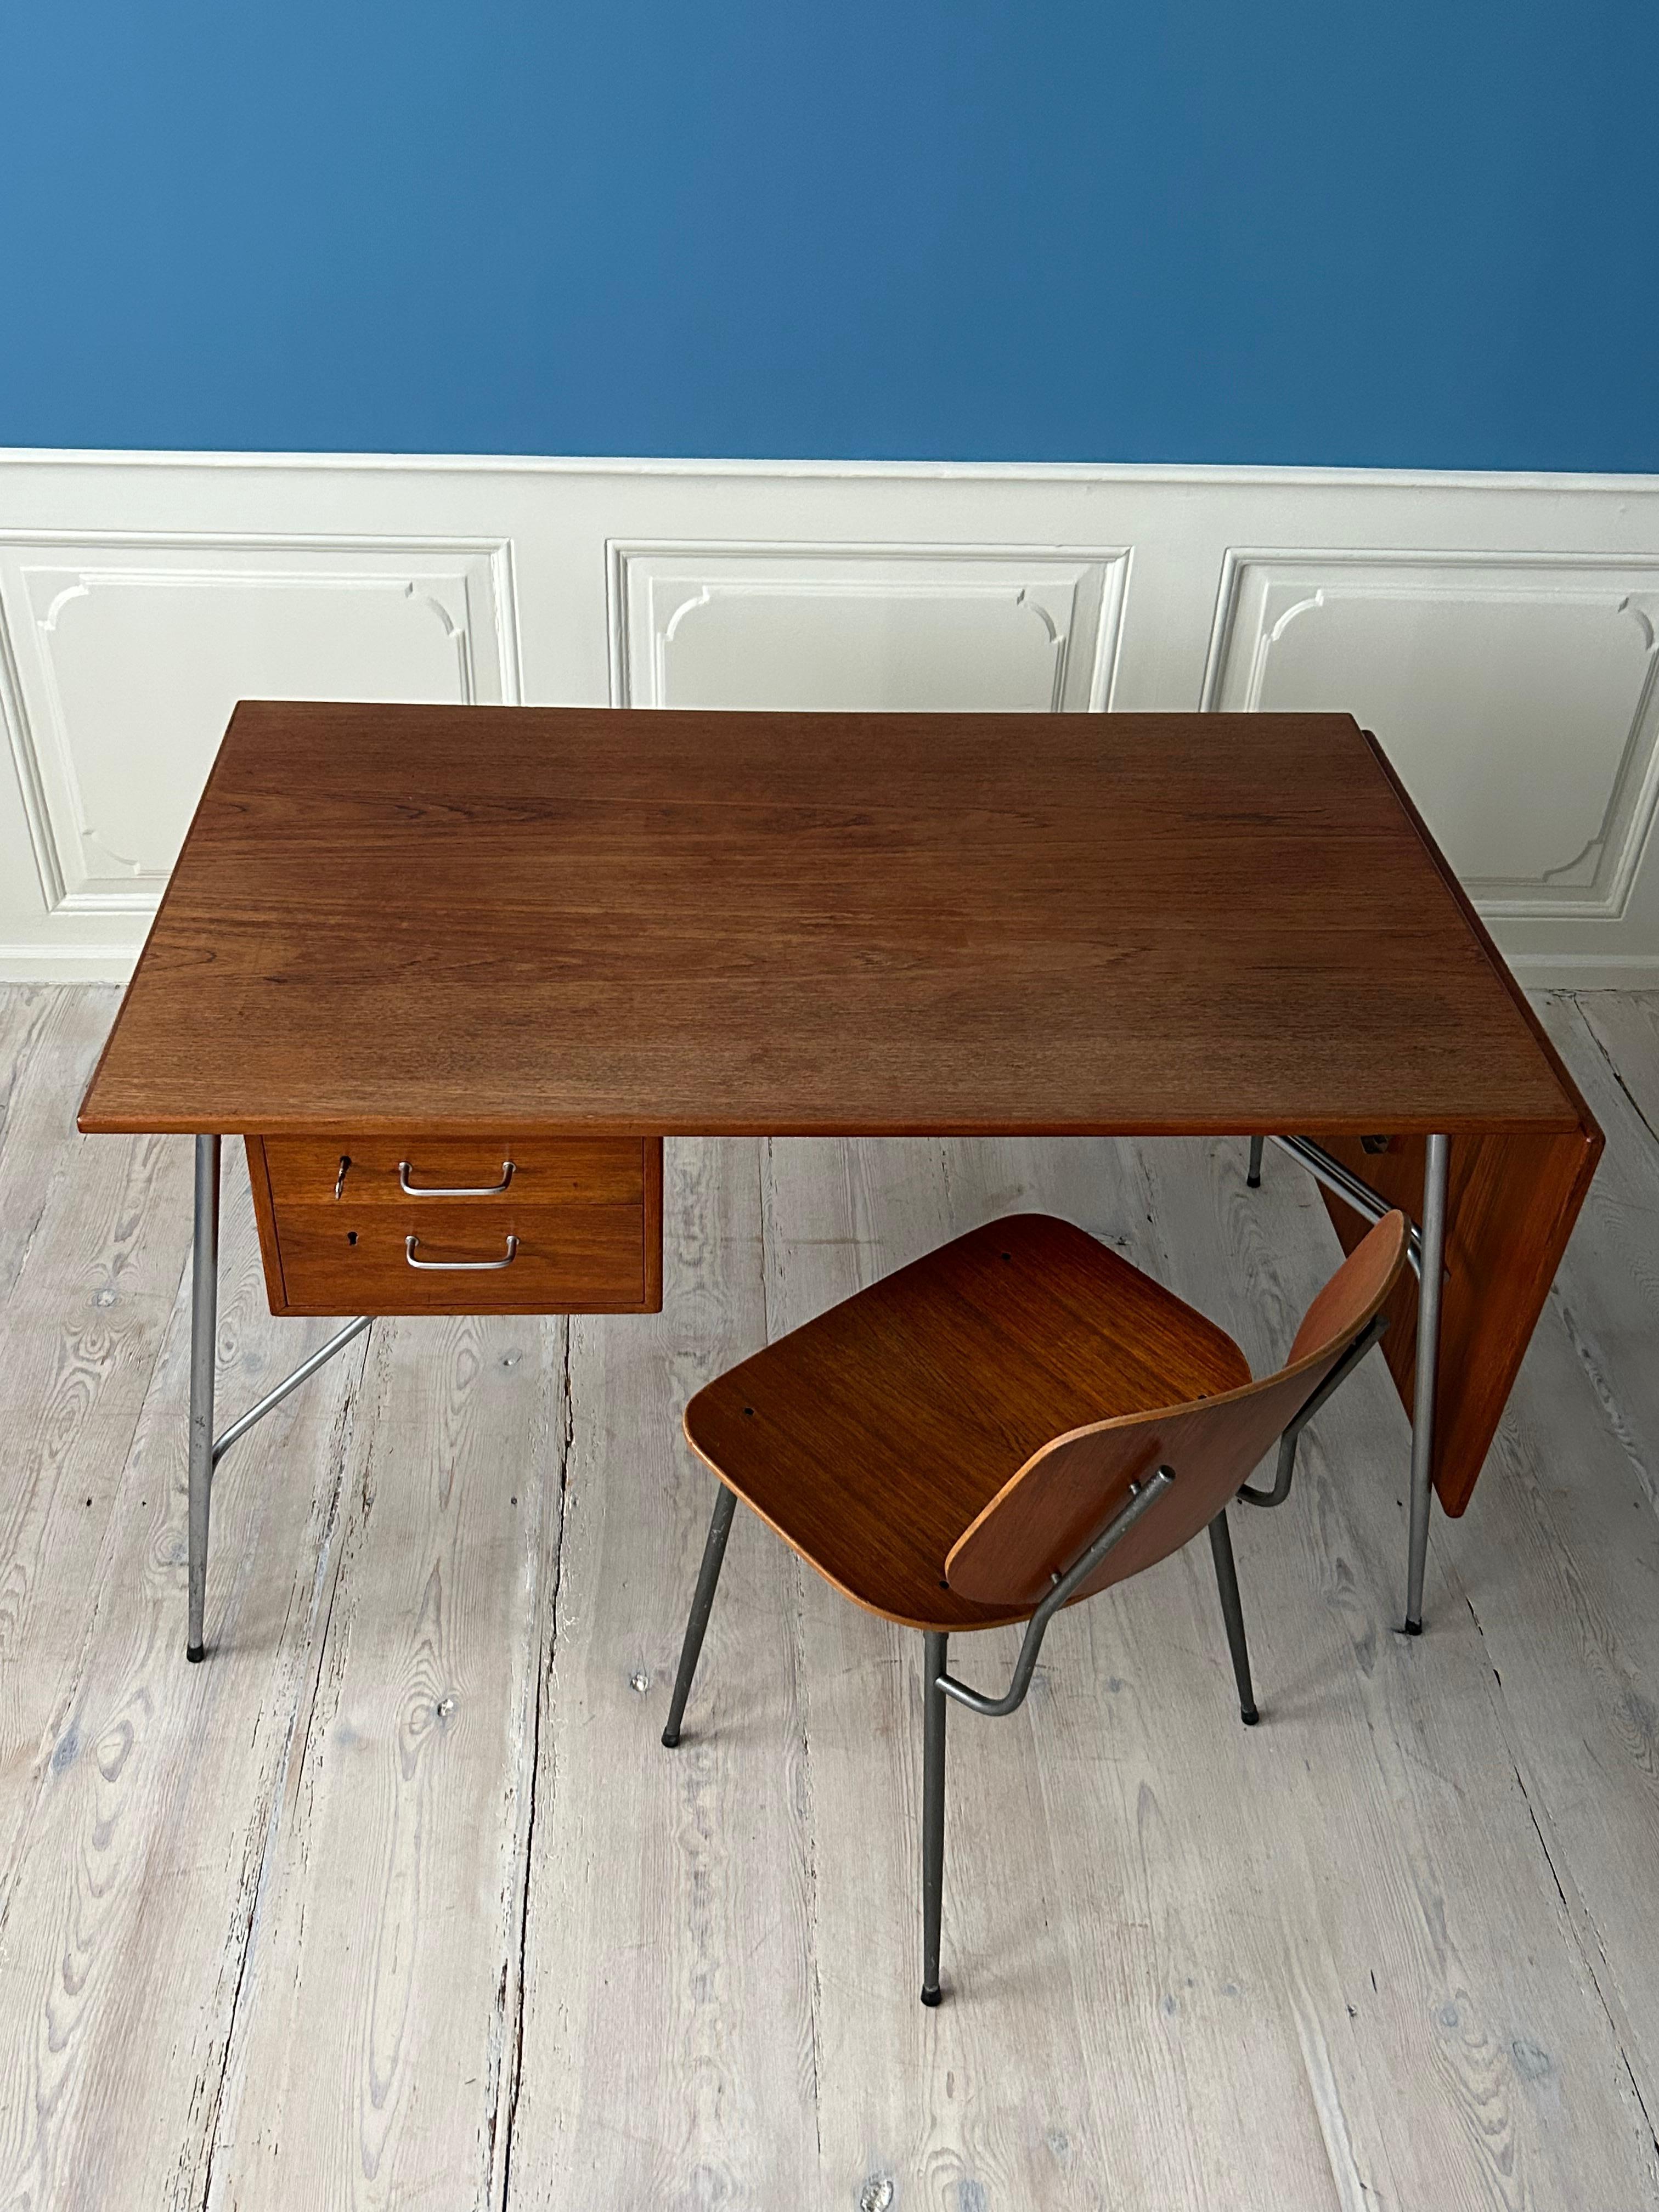 Scandinavian Modern Vintage Børge Mogensen Desk and Chair in Teak and Steel, Denmark, 20th Century For Sale